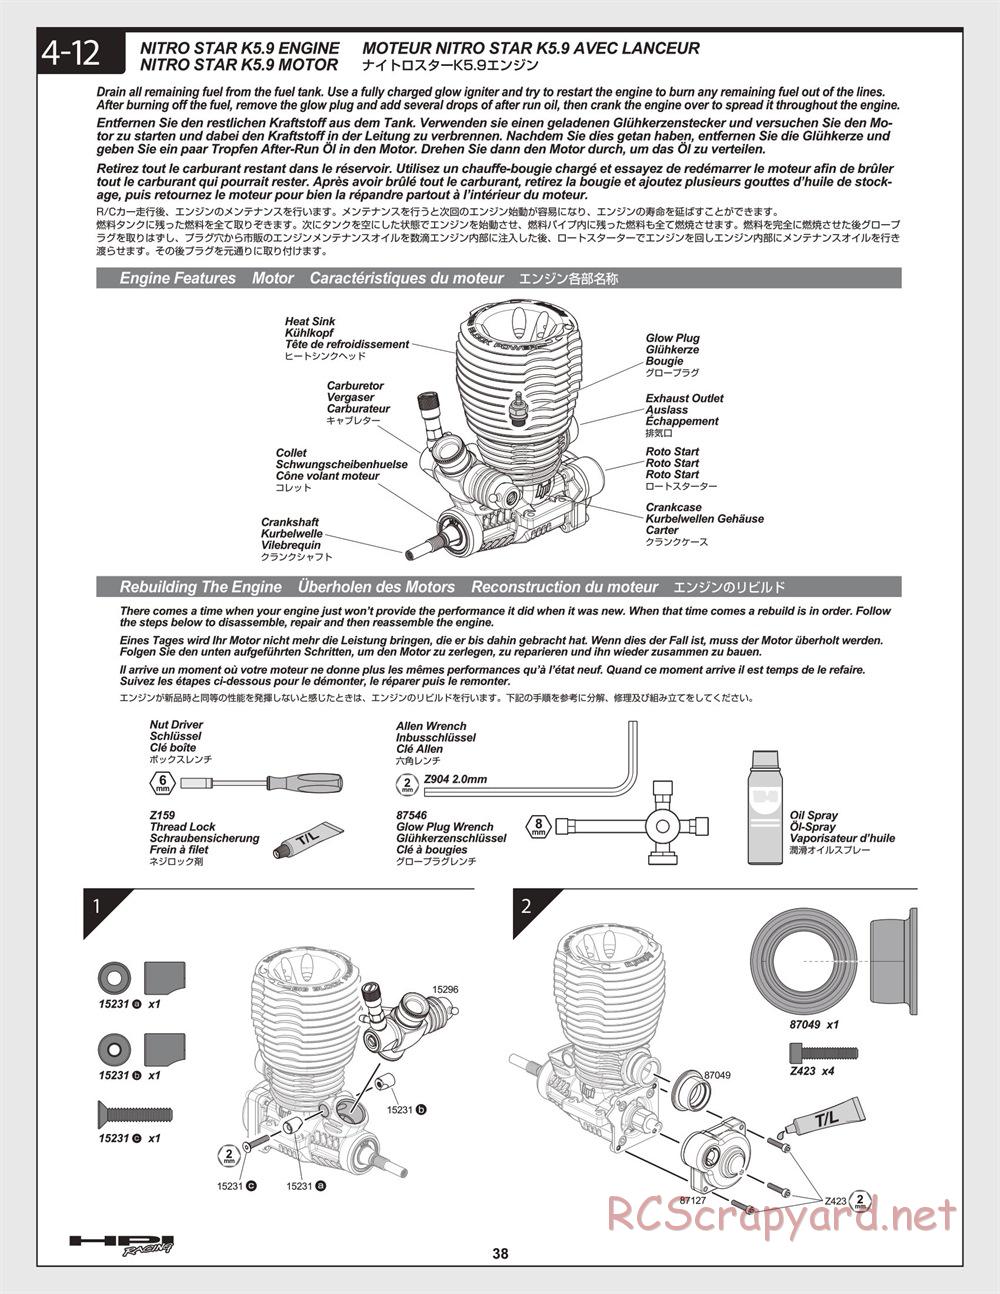 HPI - Savage XL 5.9 - Manual - Page 38